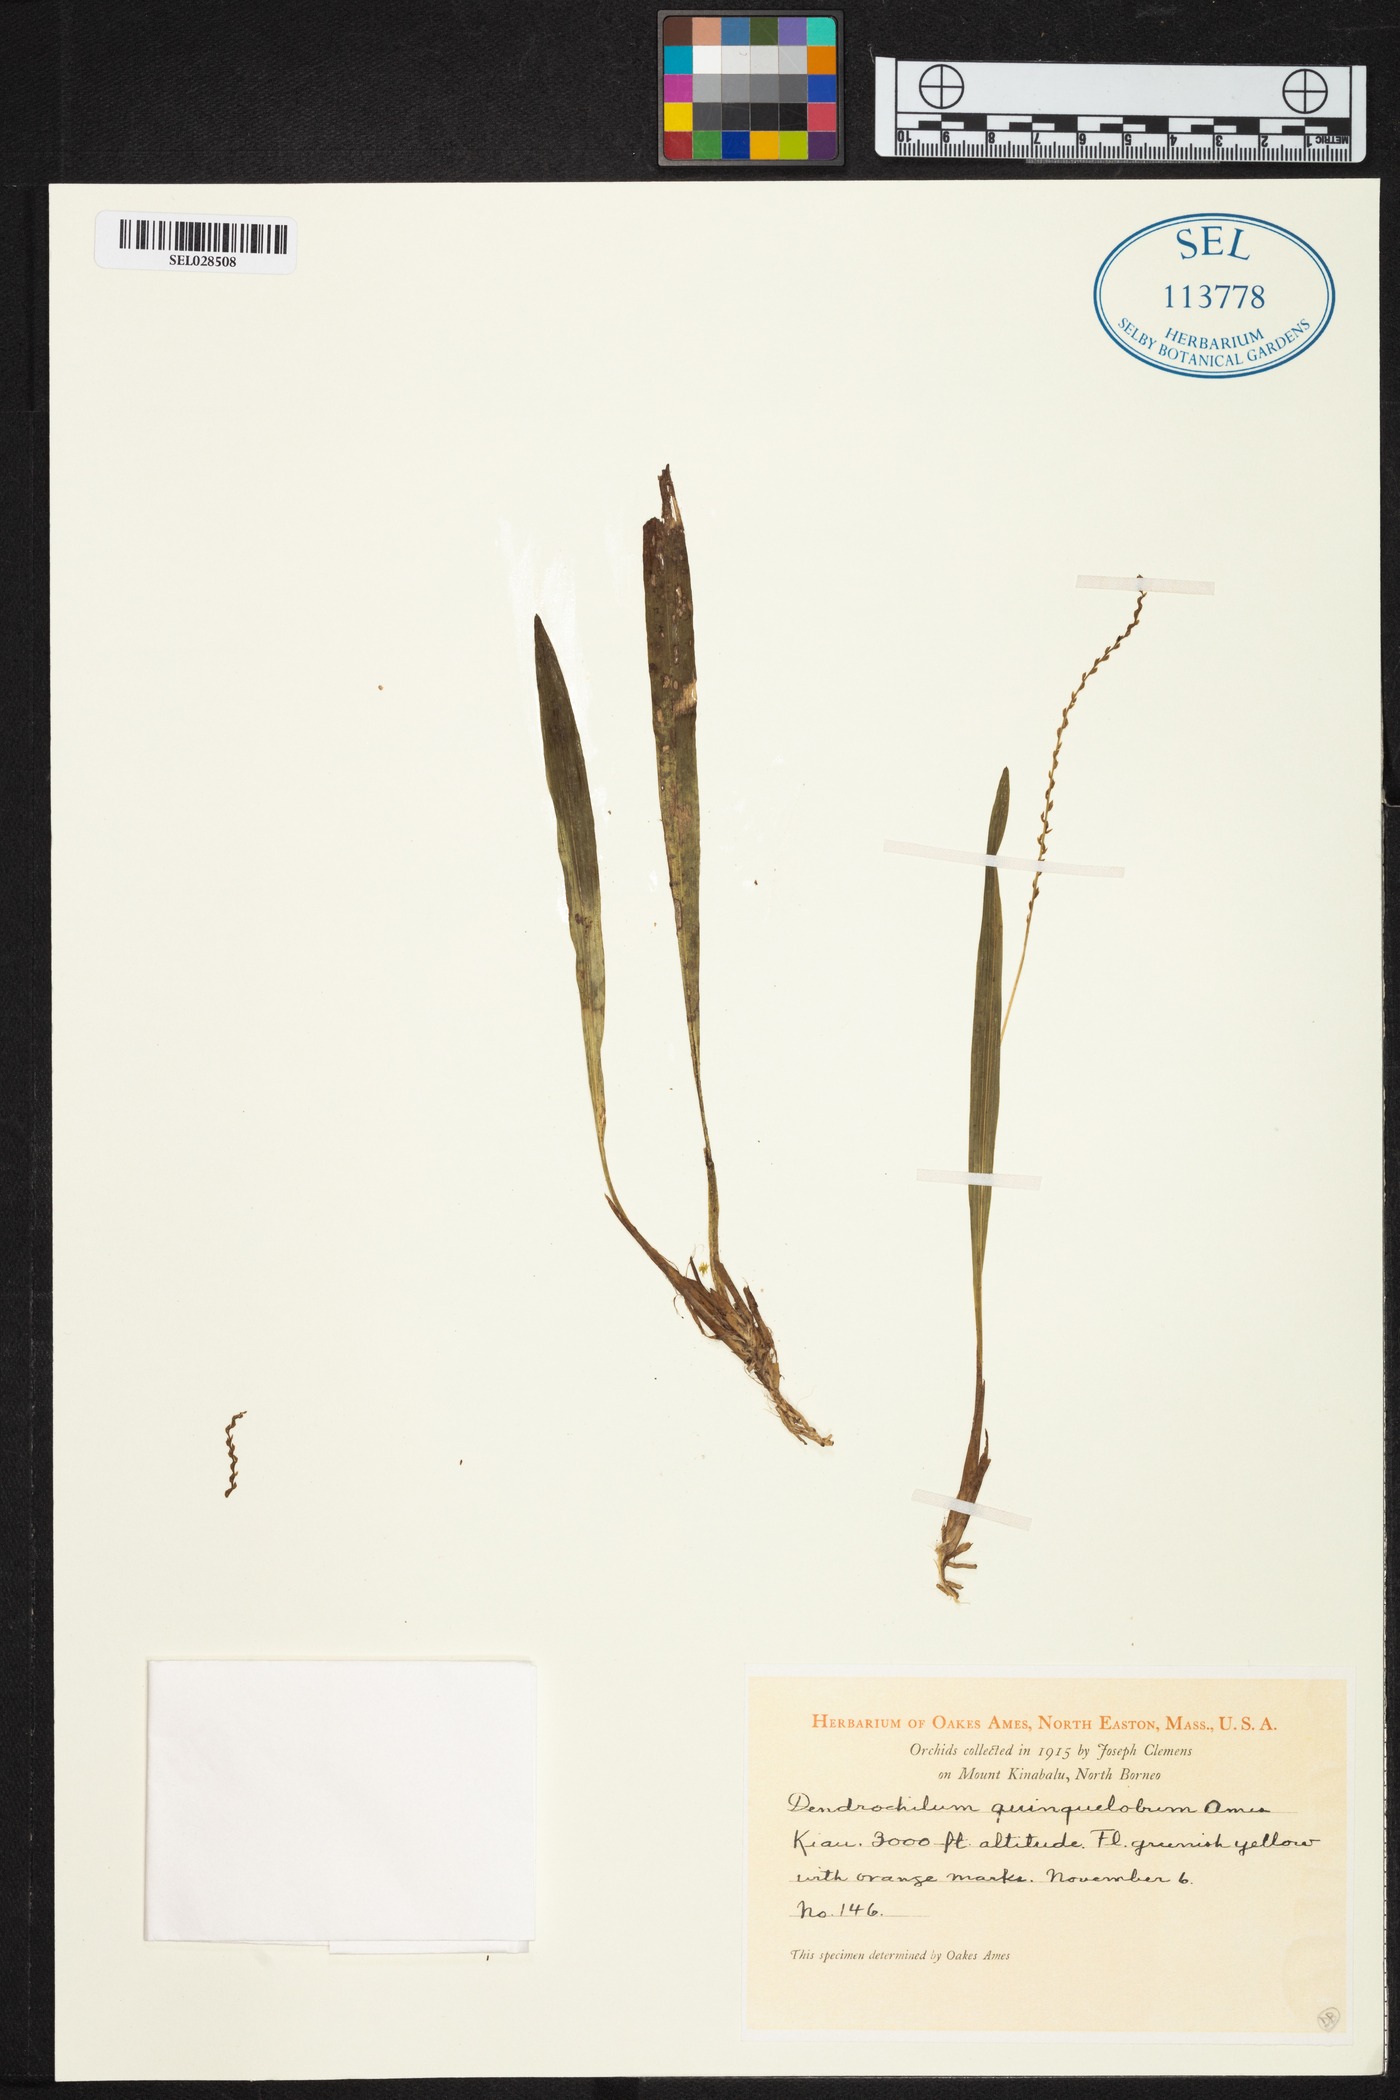 Dendrochilum gibbsiae image